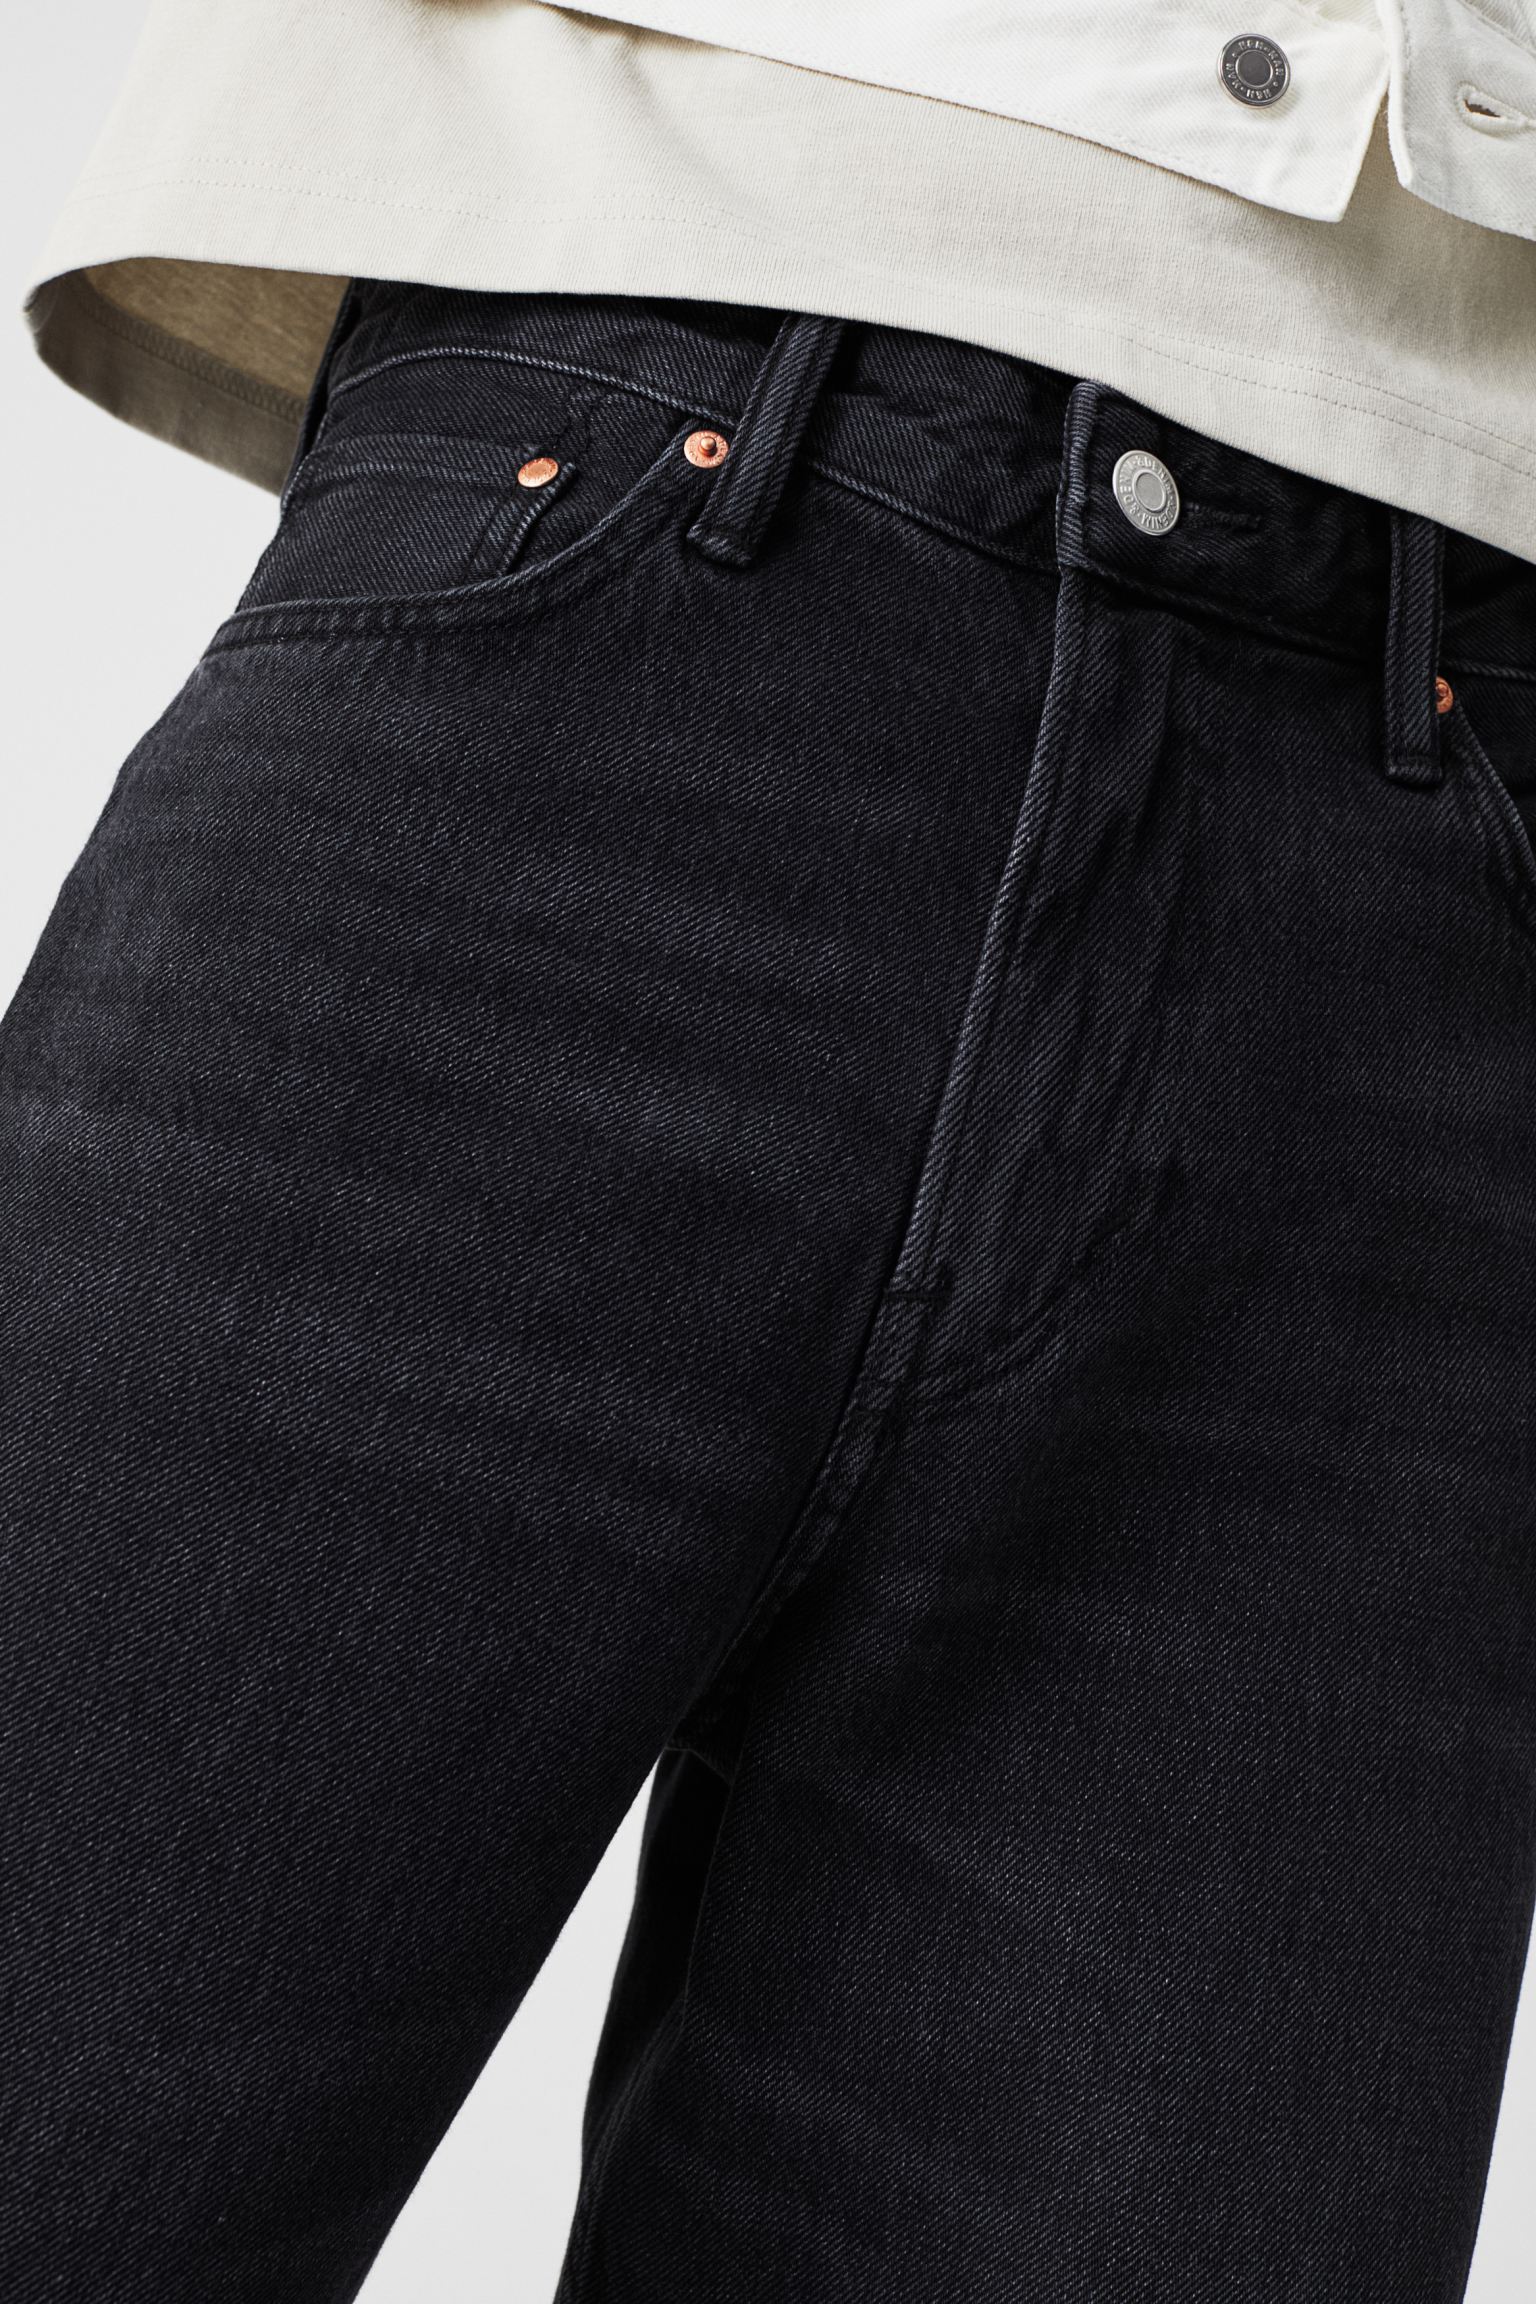 Black Loose Jeans – Trend Setters